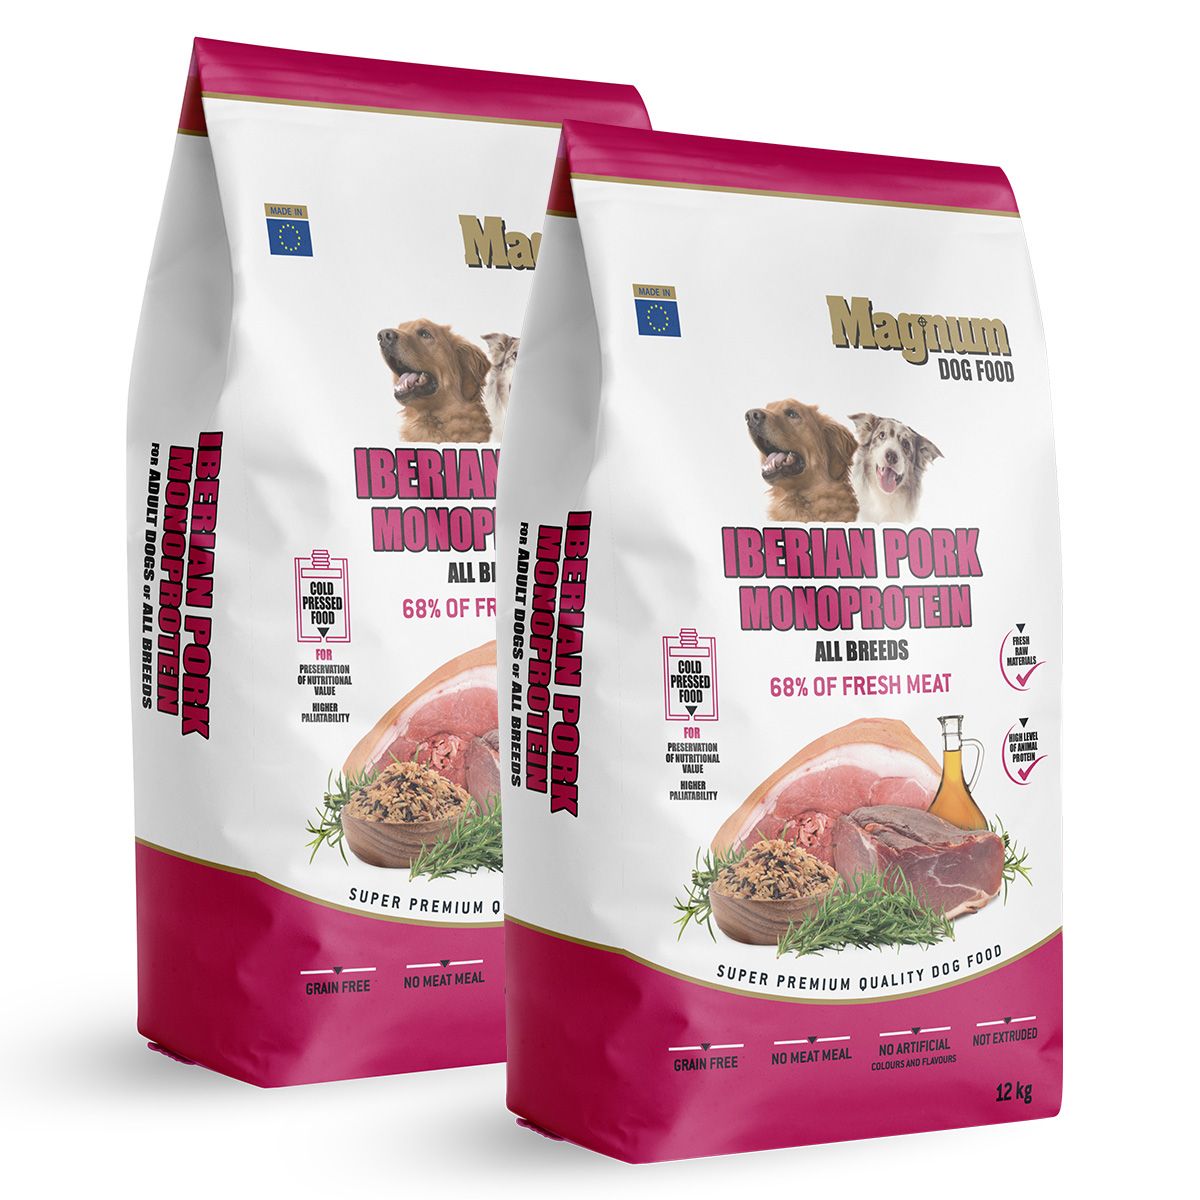 Magnum Iberian Pork & Monoprotein All Breed 24kg Magnum dog food